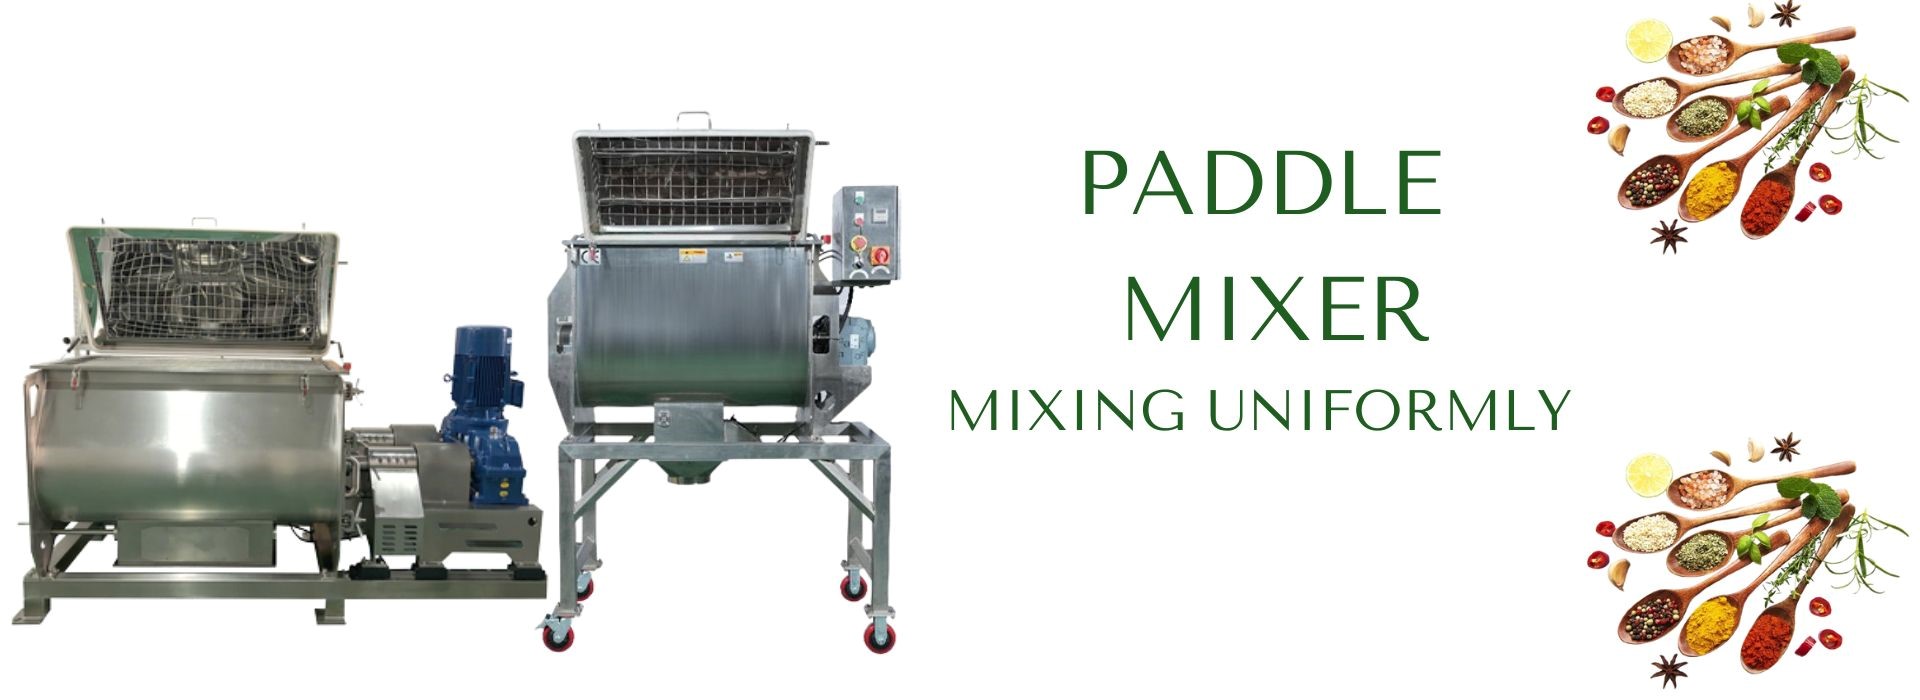 Paddle Mixer Design دېگەن نېمە؟